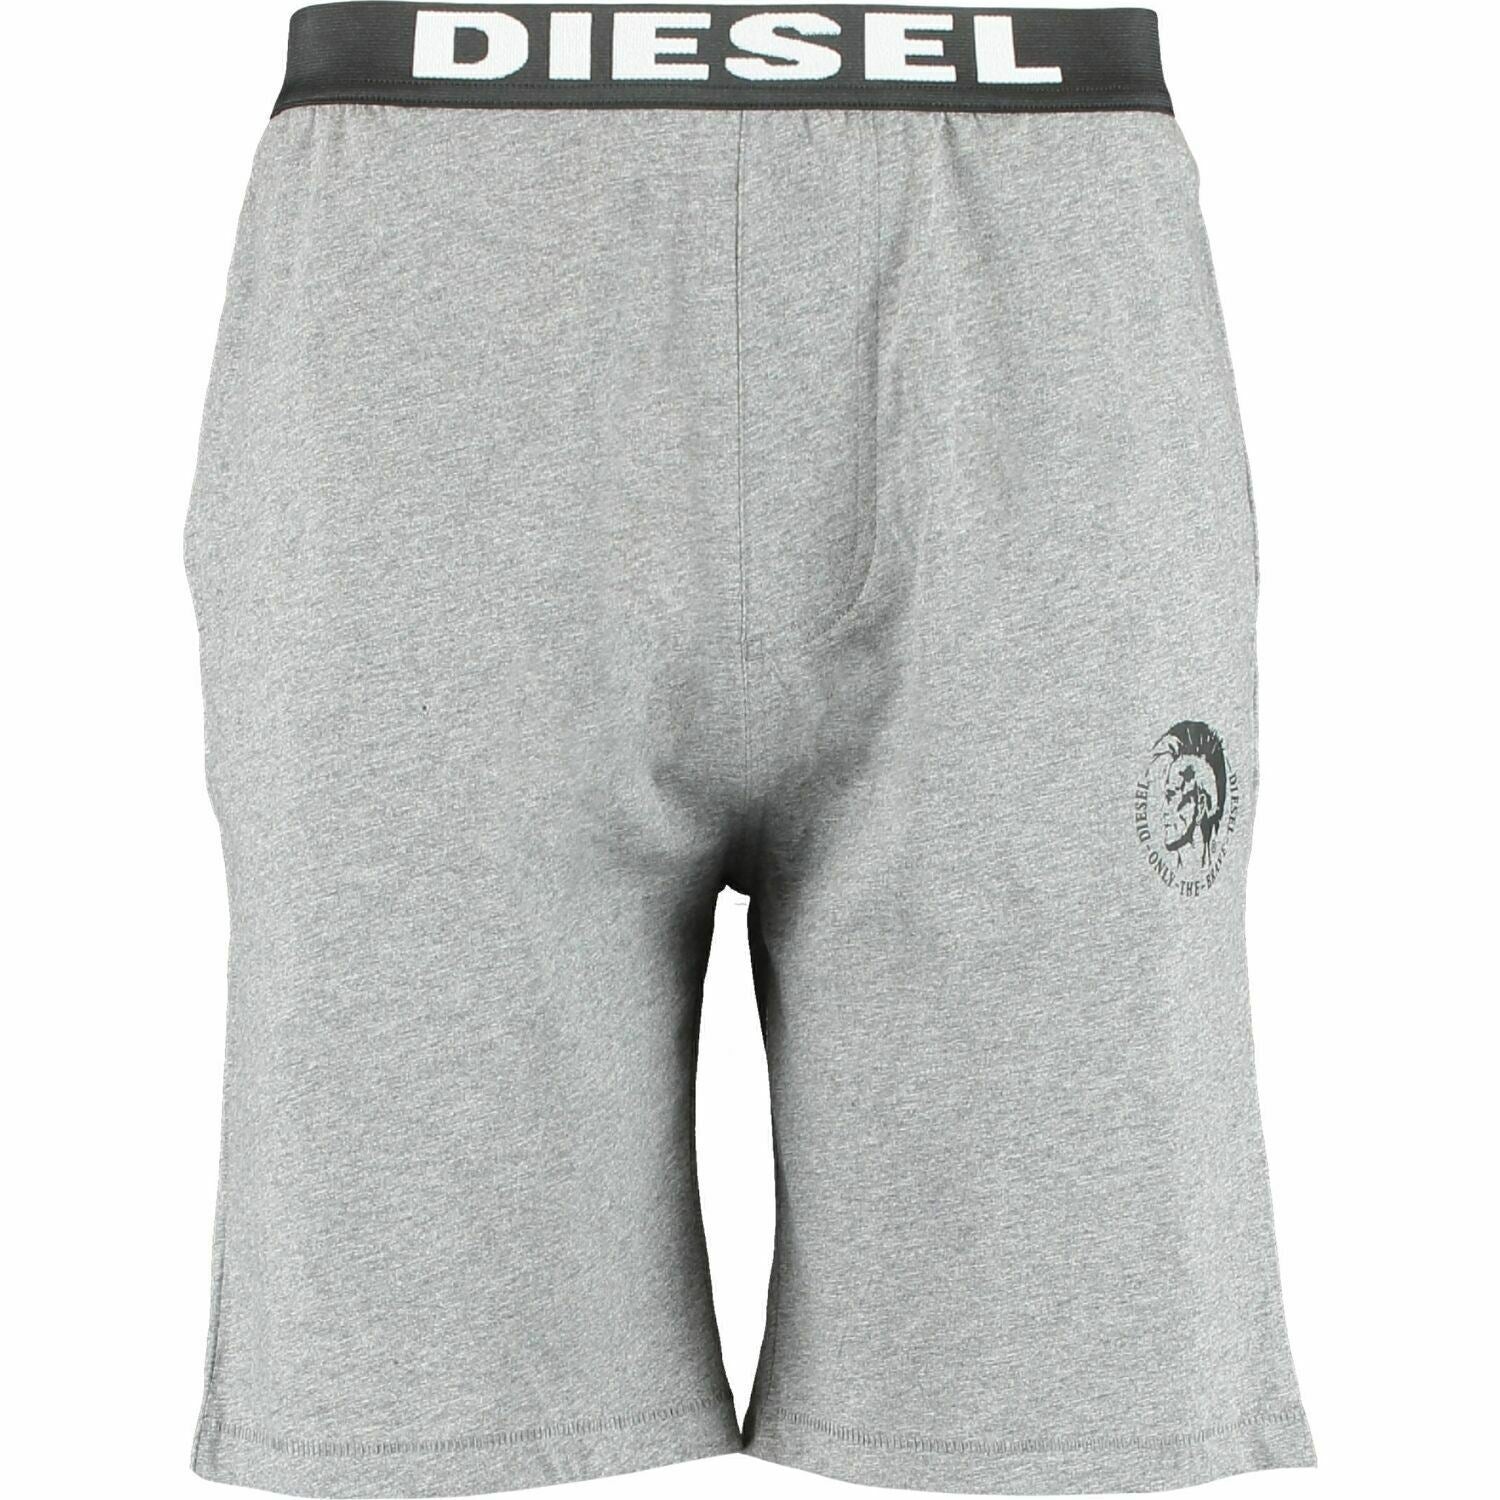 DIESEL Men's TOM Lounge Shorts, Grey, size MEDIUM